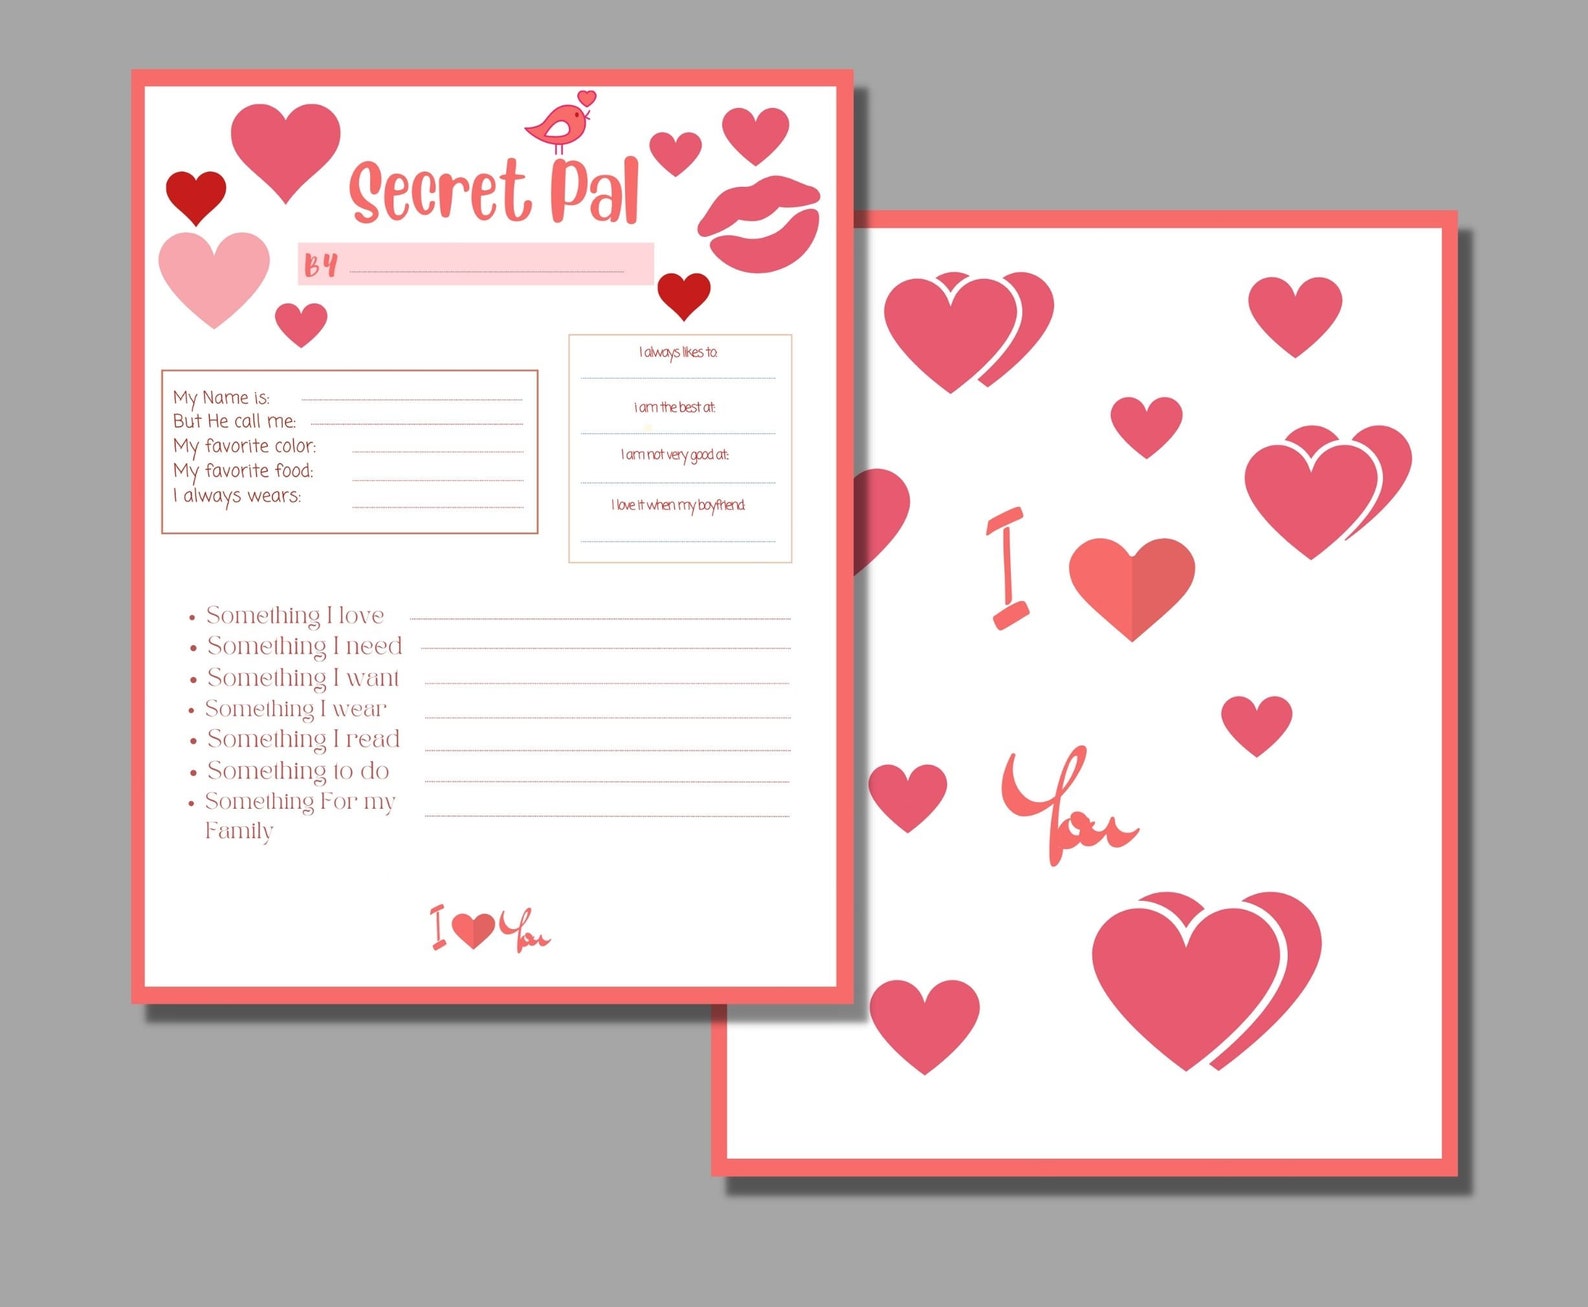 valentine-s-day-secret-pal-questionnaire-printable-gift-exchange-wish